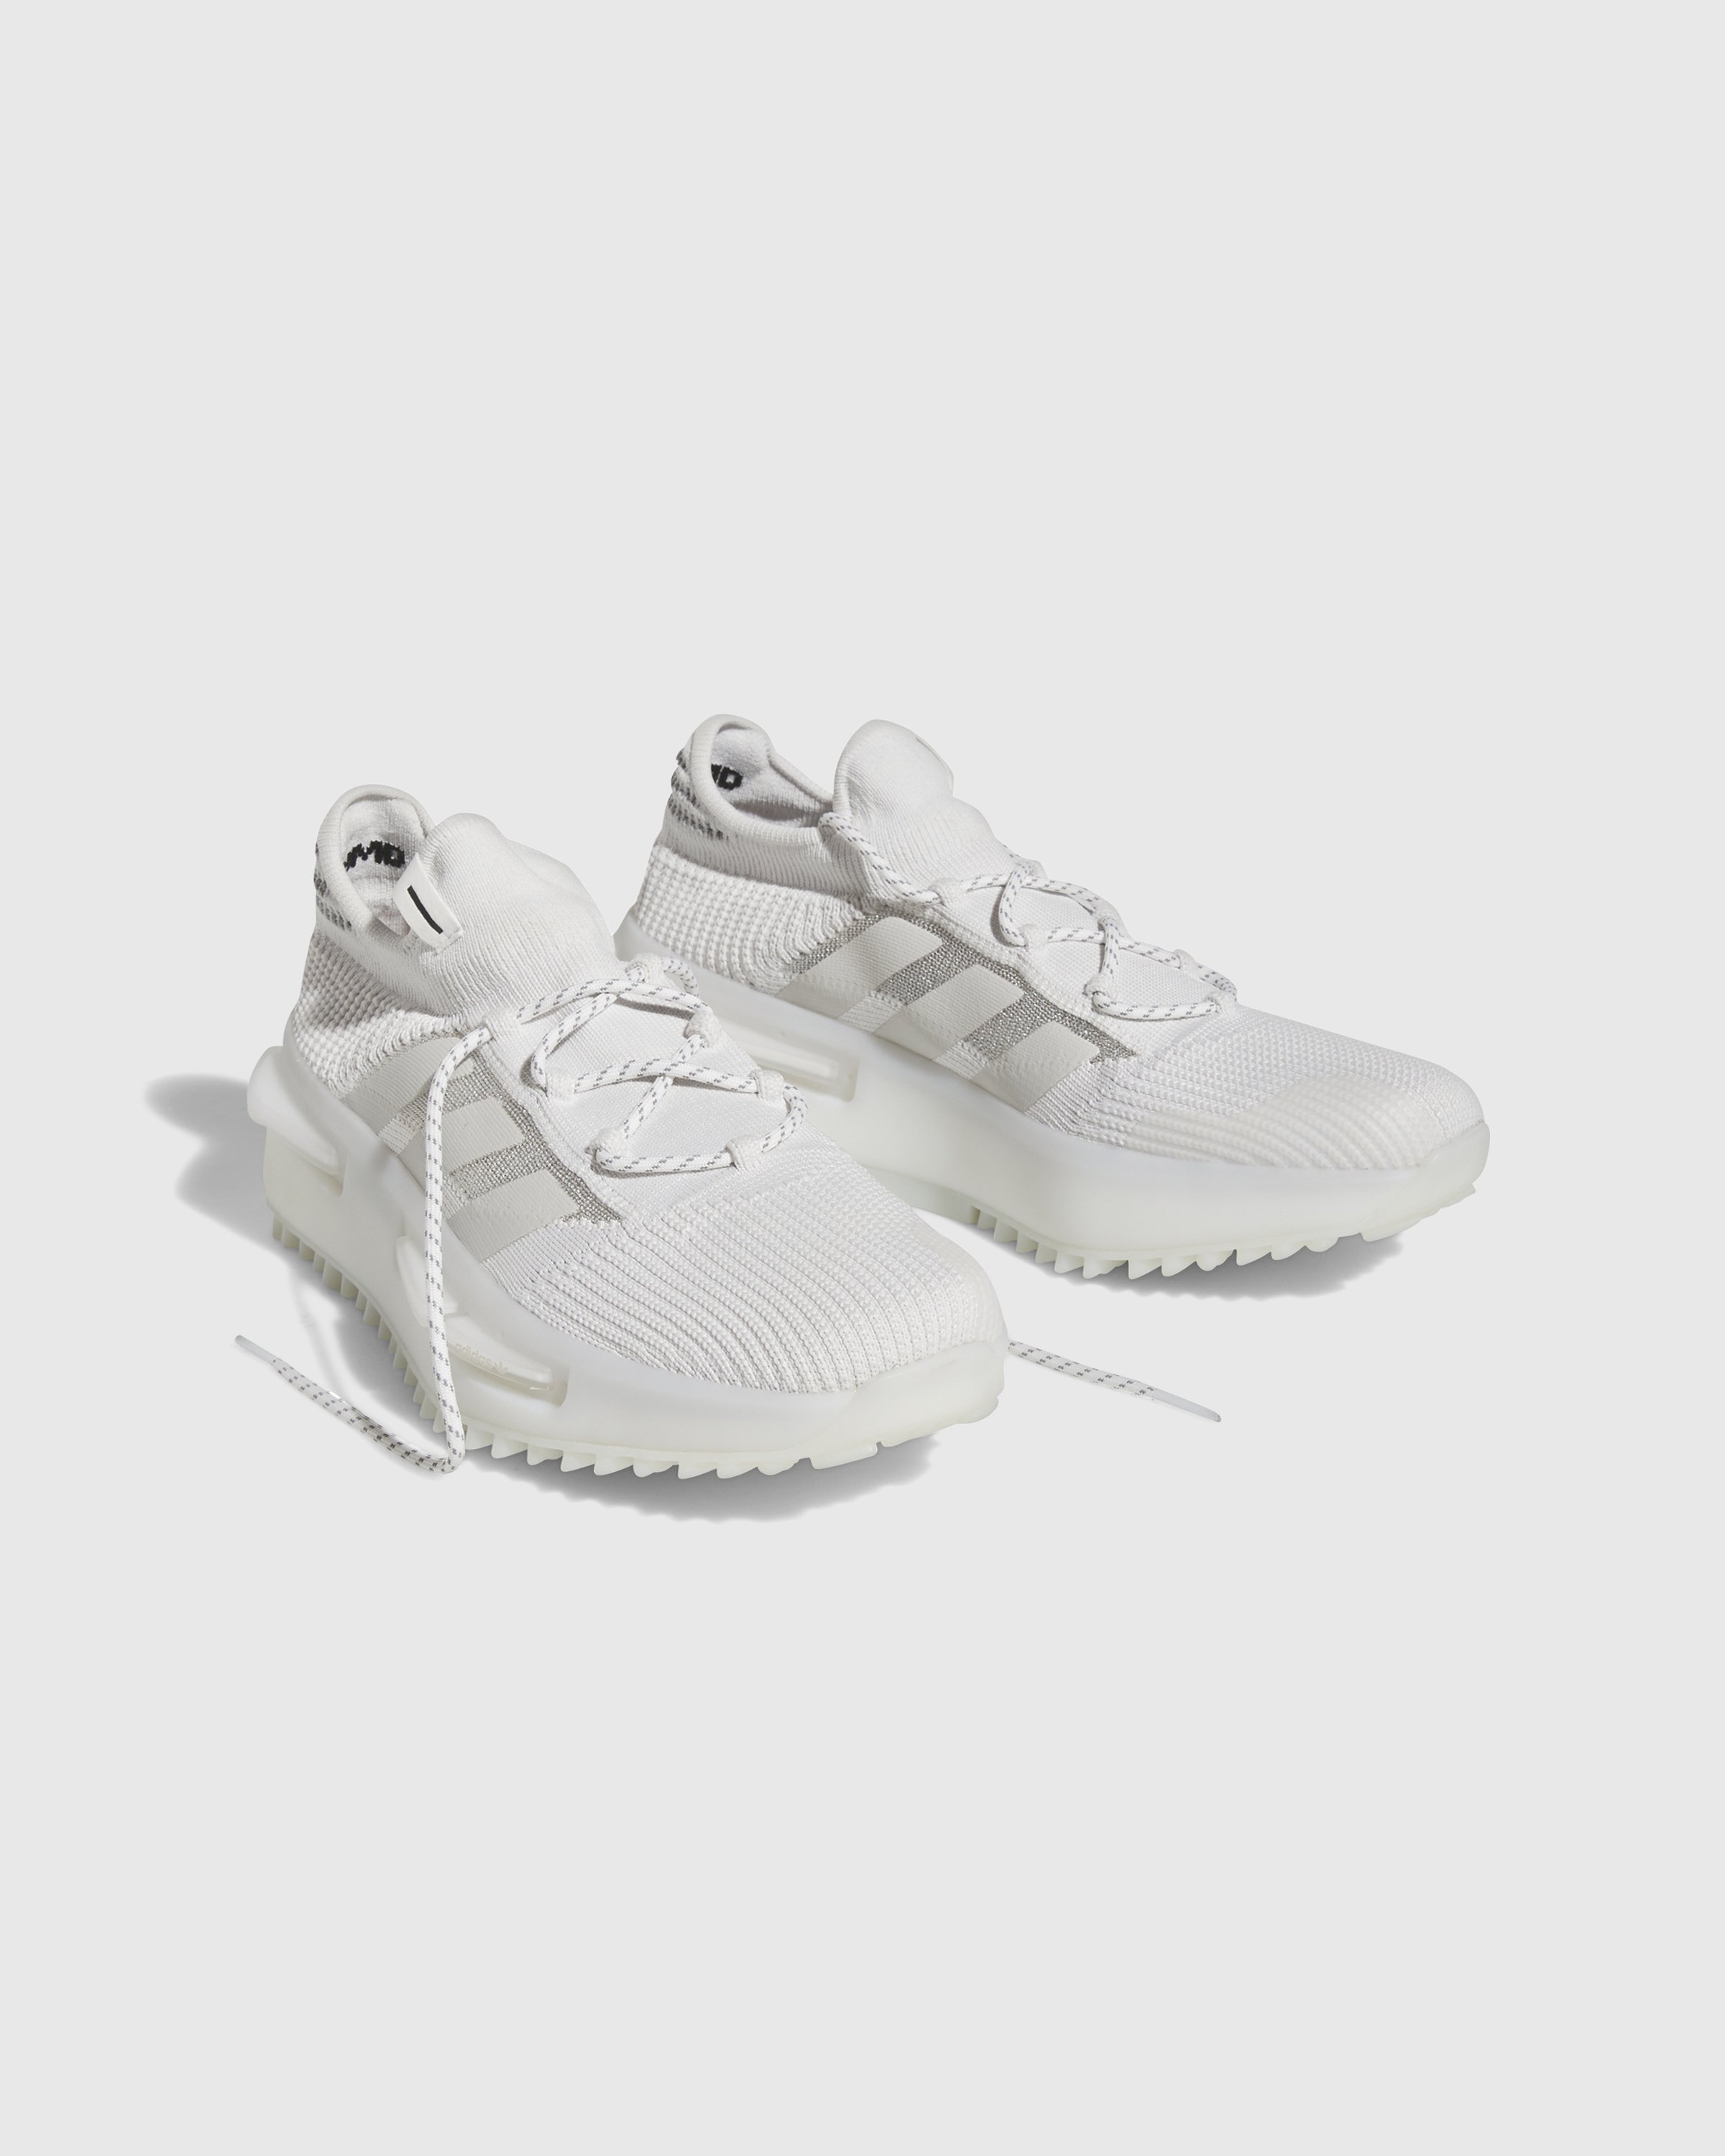 Adidas - NMD S1 - Footwear - White - Image 3